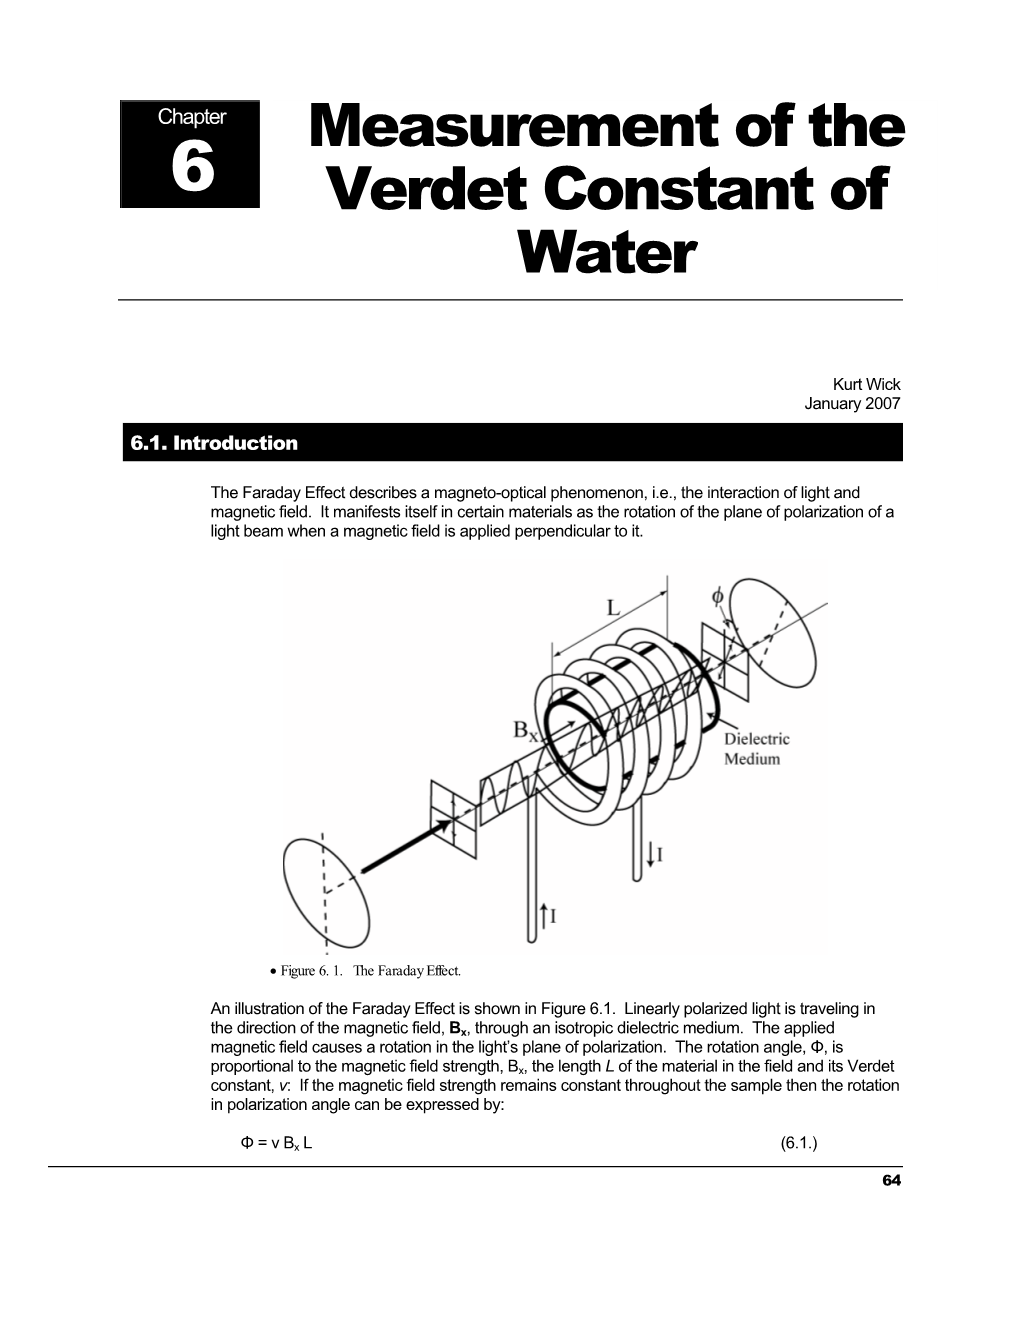 Measurement of the Verdet Constant of Water